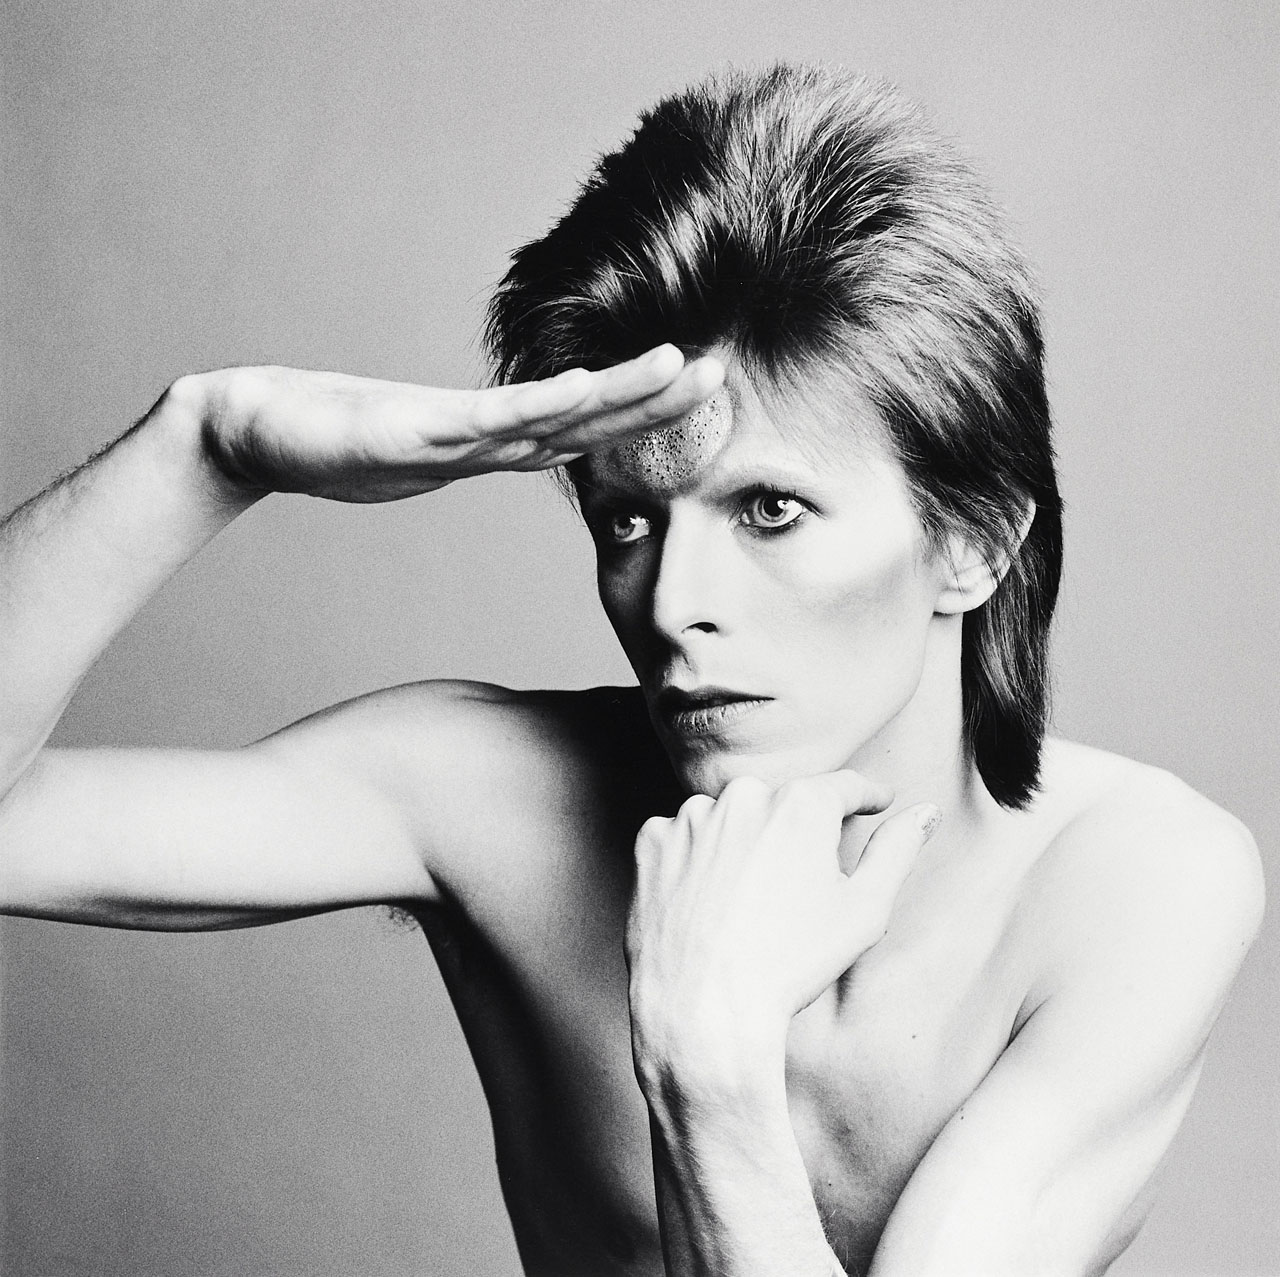 MASAYOSHI SUKITA (* 1938) - David Bowie – As I Ask You To Focus On, 1973